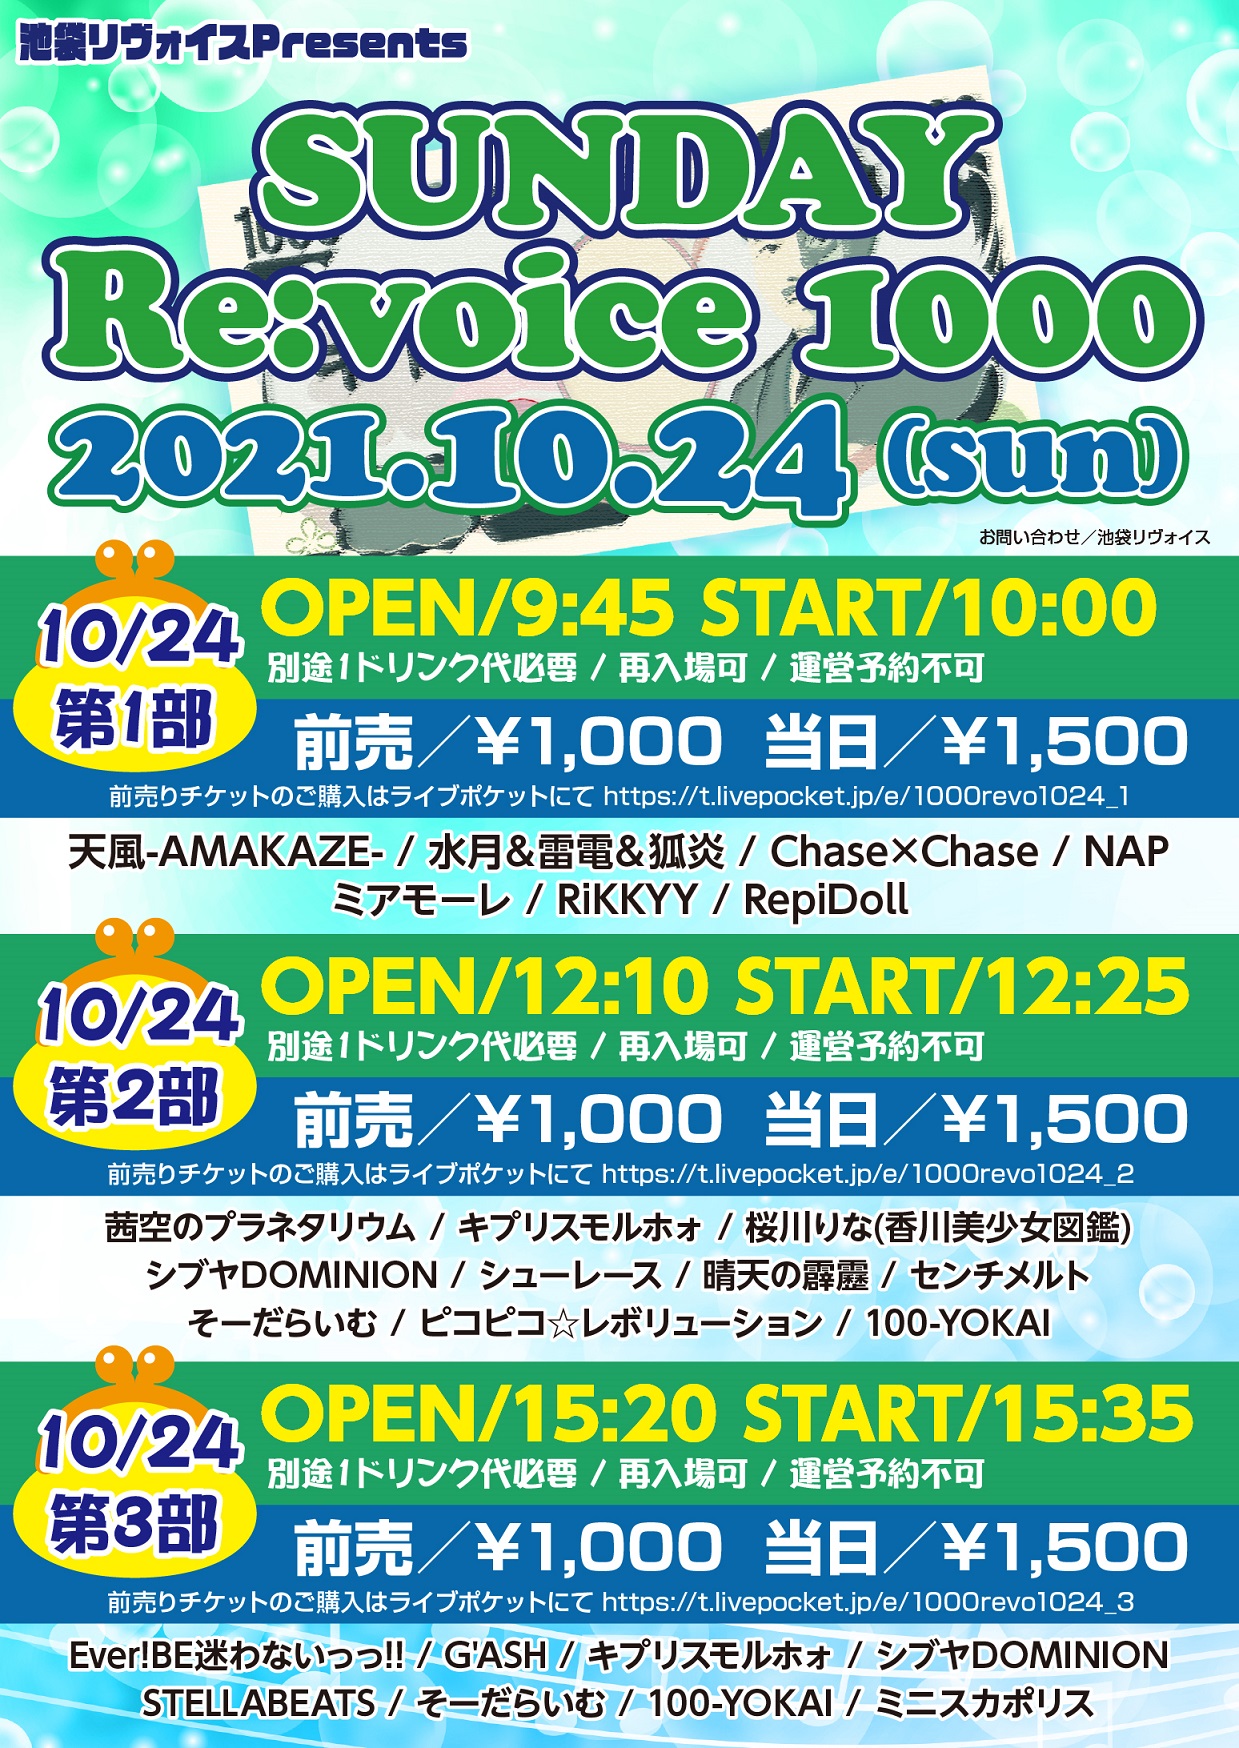 SUNDAY Revoice 1000(10/24)